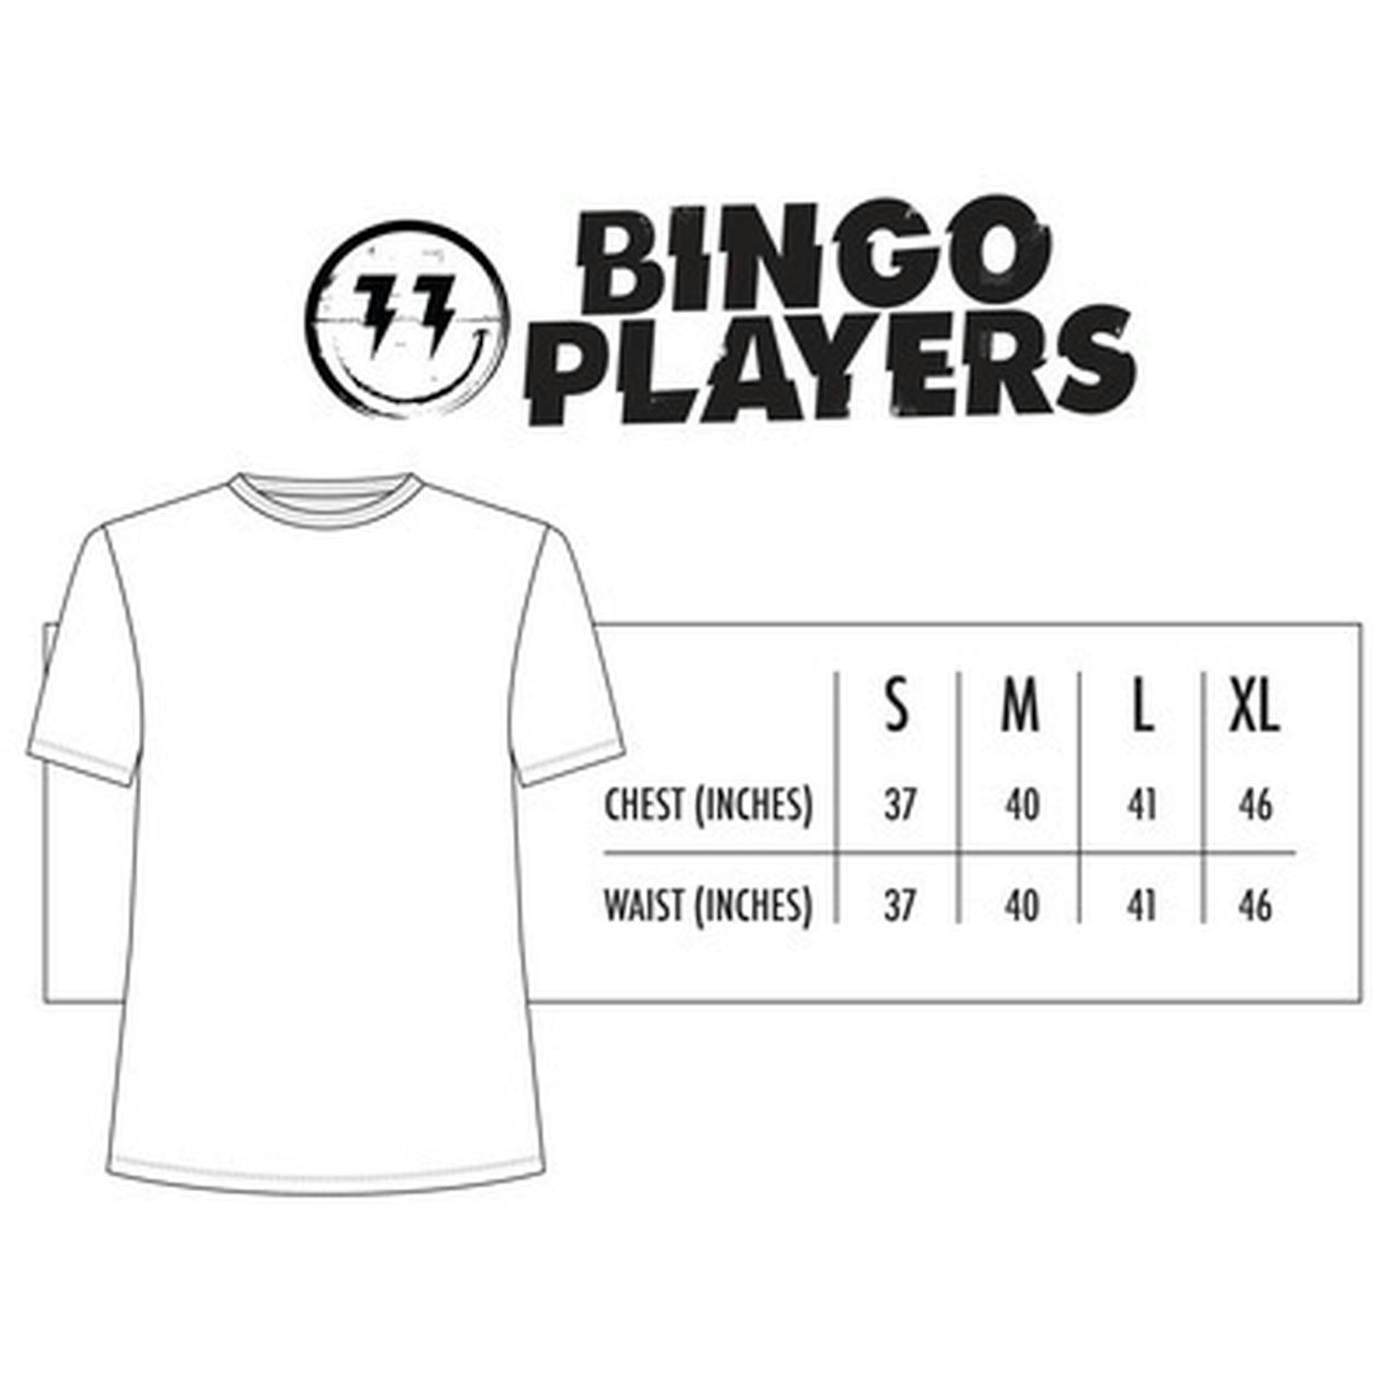 Bingo Players Rattle & Roll Tour Tee